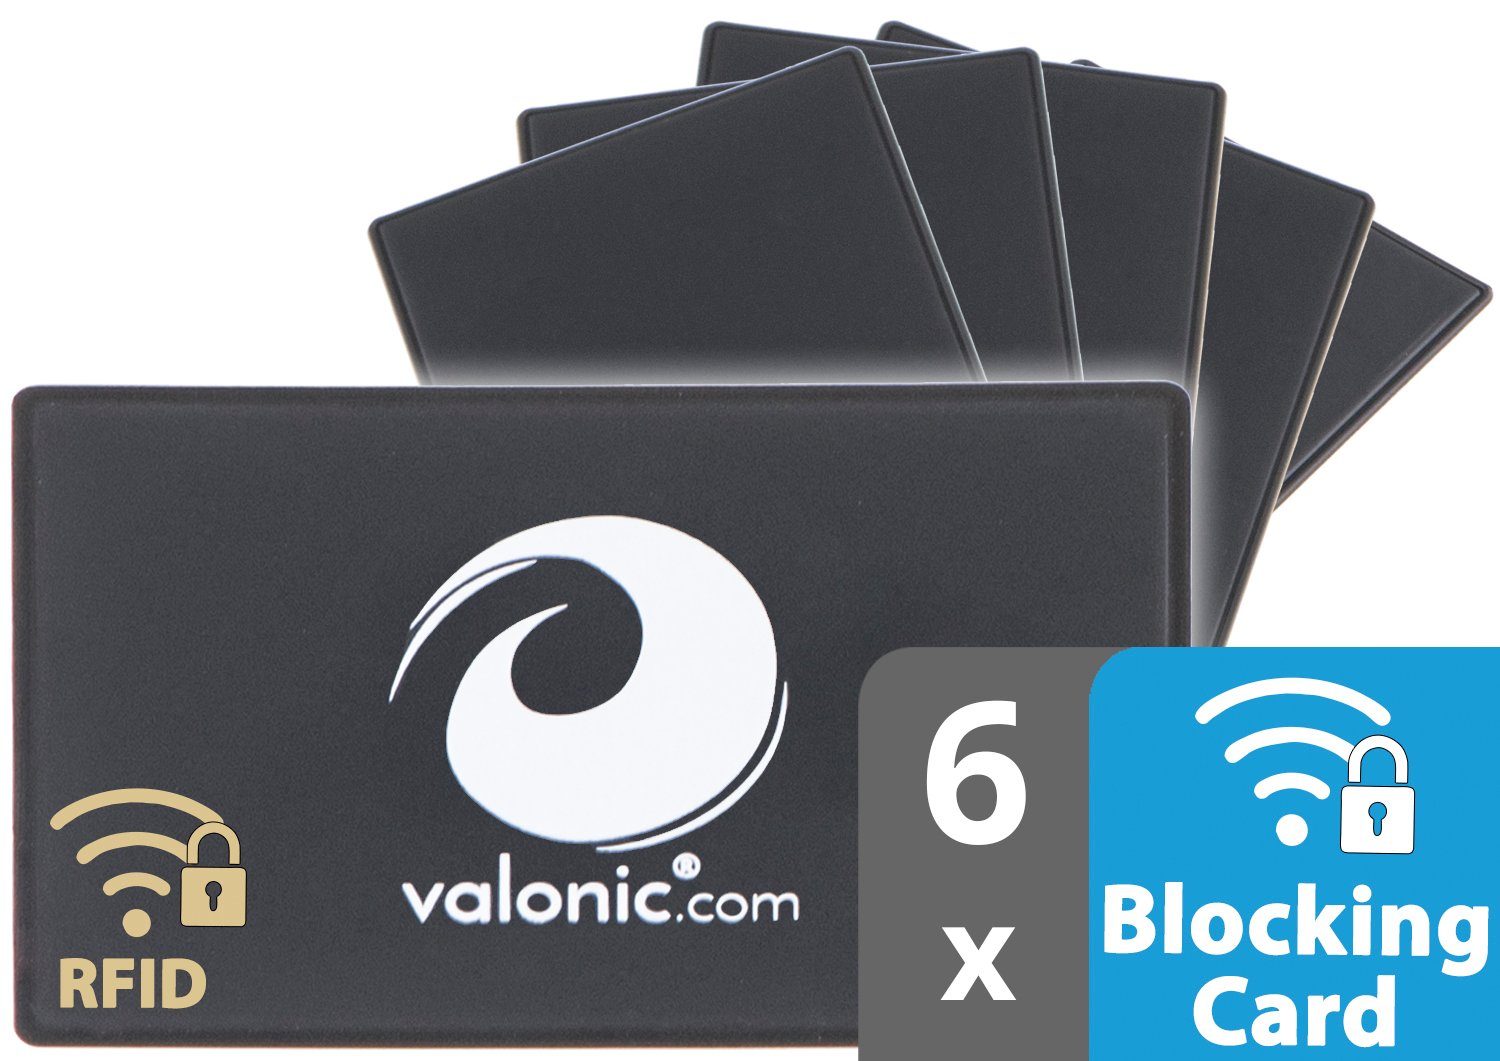 valonic Etui valonic - RFID 59 91 geprüft, dünn ultra DEKRA mm x Blockerkarte